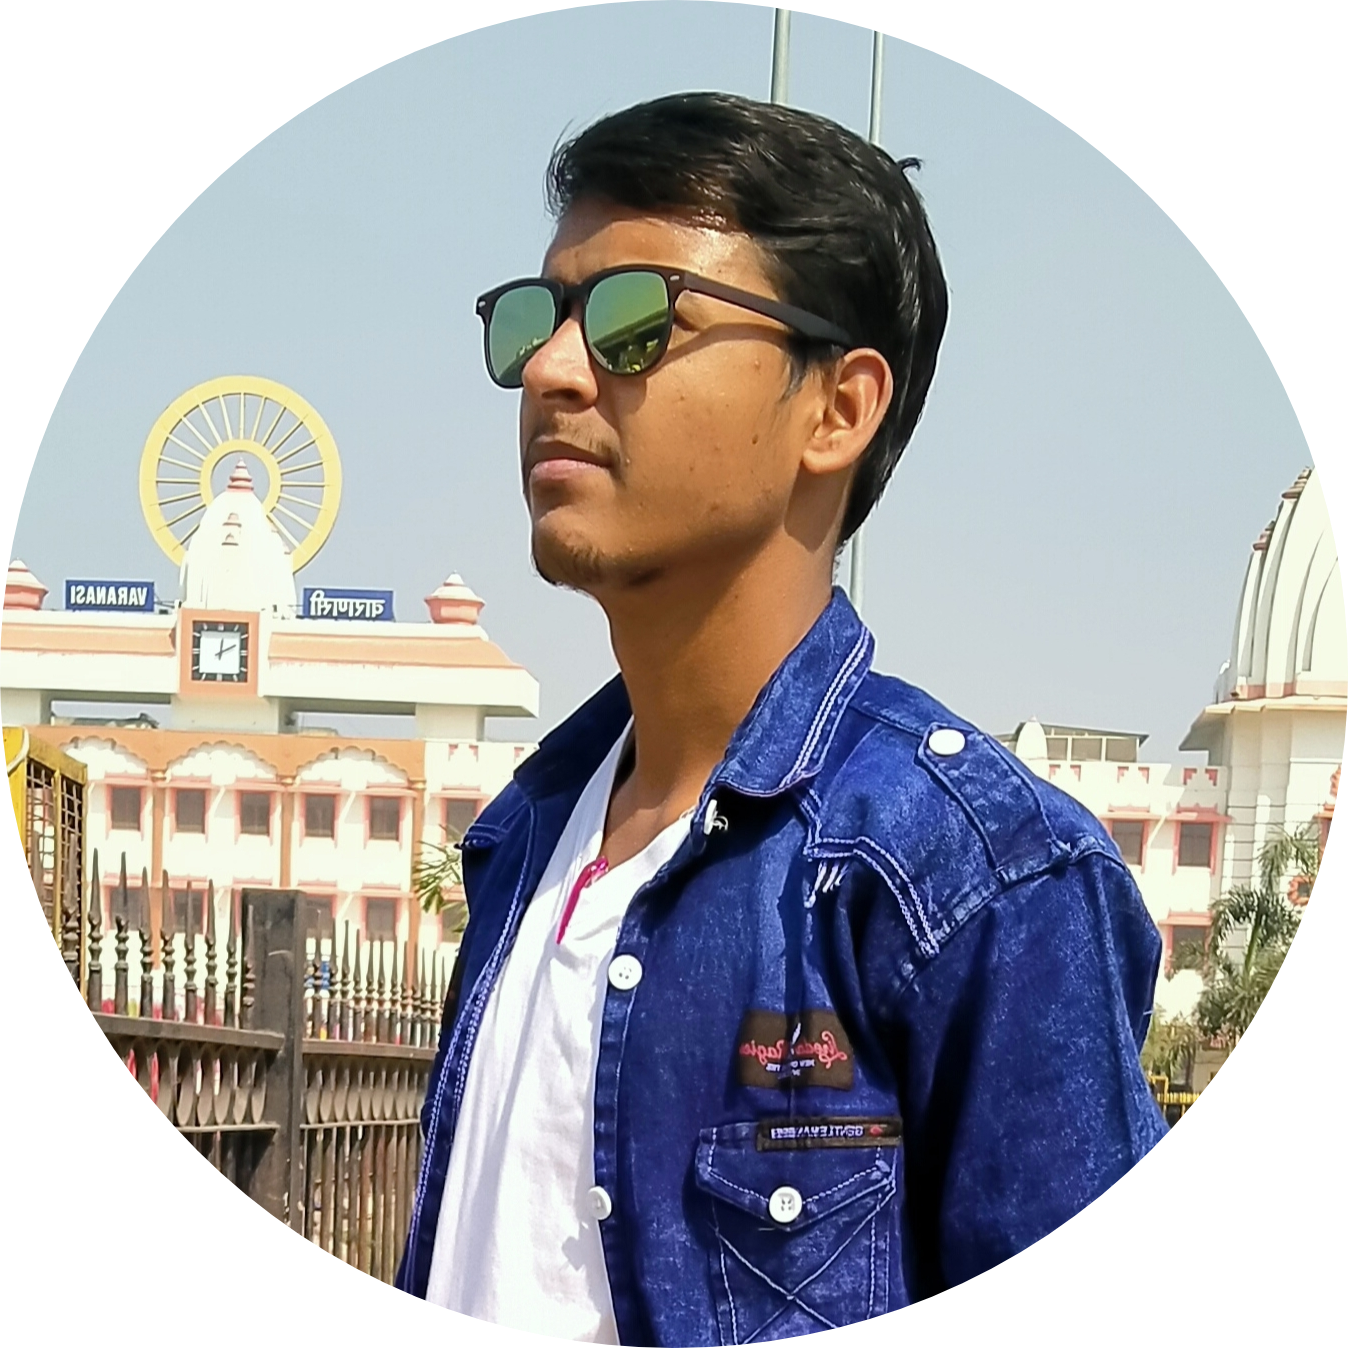 gaurav profile Picture